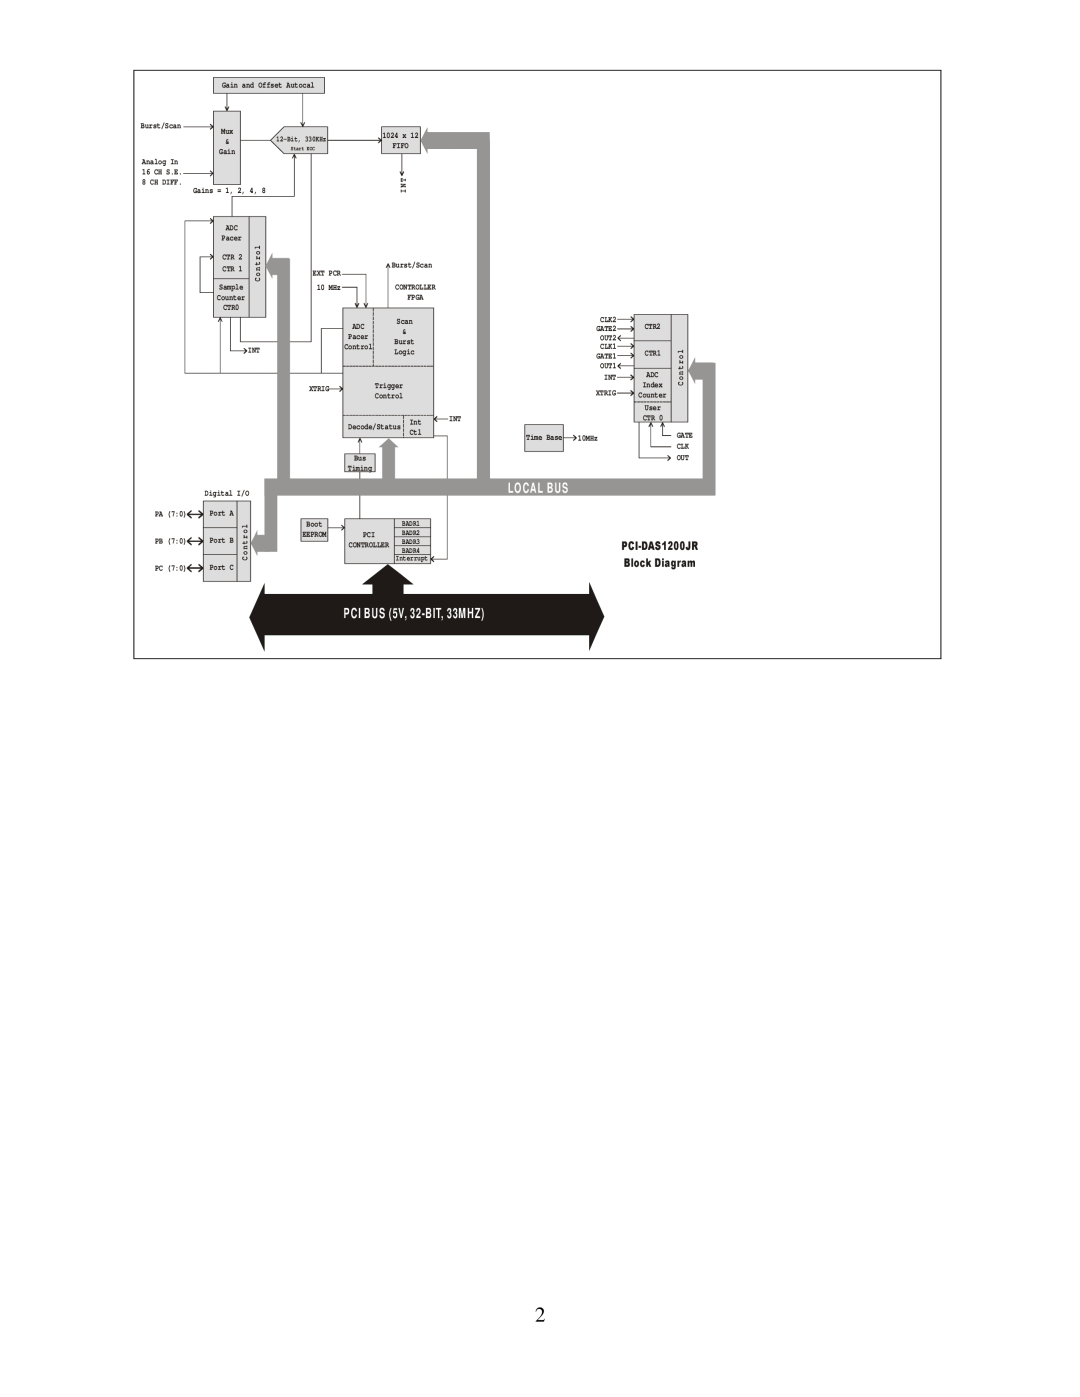 Omega Engineering PCI-DAS1200 manual 3&,%ORFN$LDJUDP6-5, Local Bus, PCI BUS 5V, 32-BIT, 33MHZ 